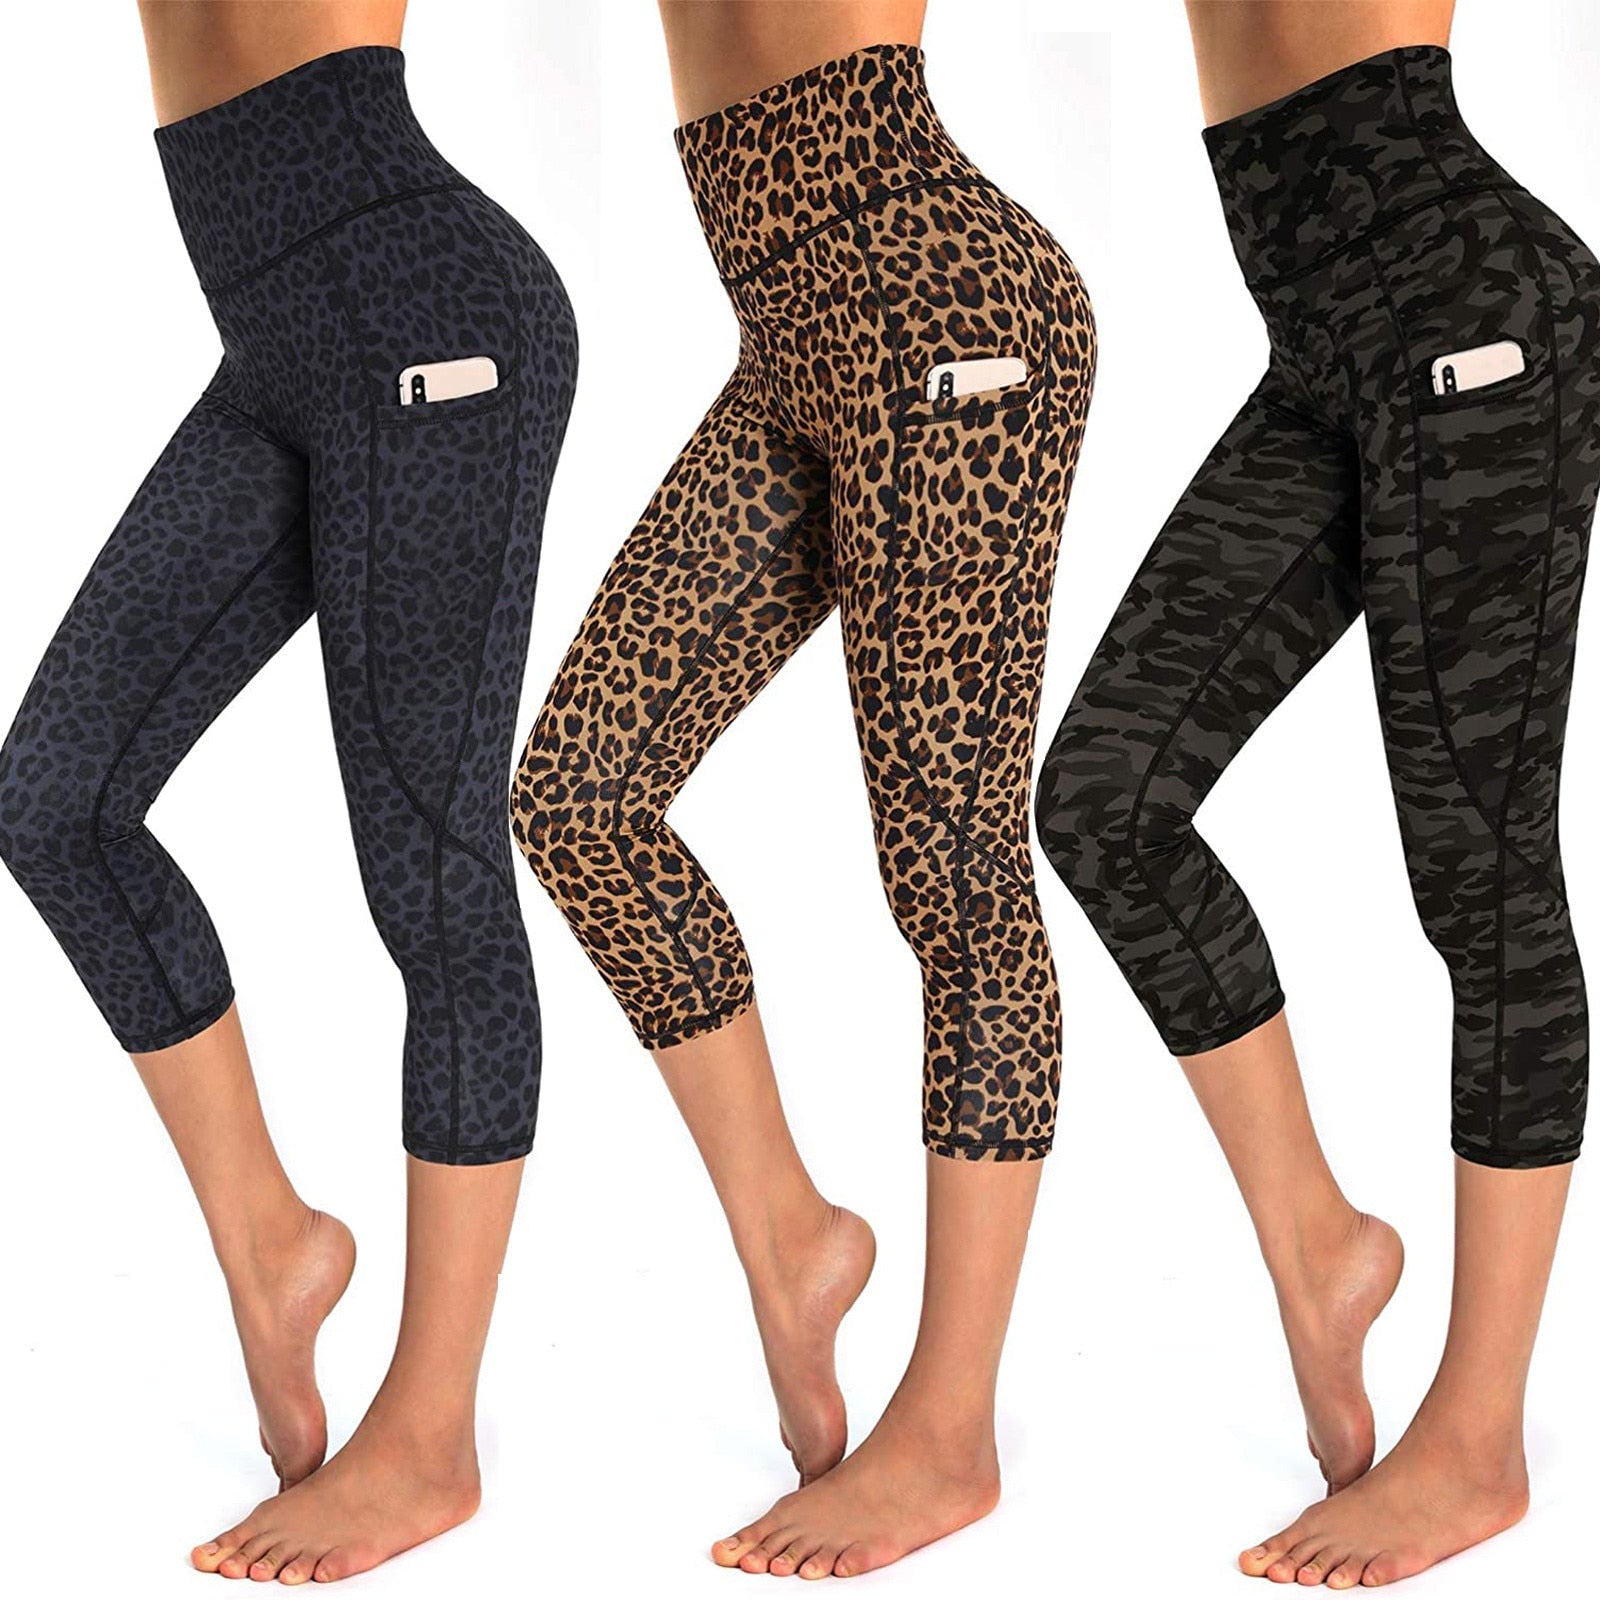 Leopard Print Fitness Leggings Fashion - Fashion Damsel